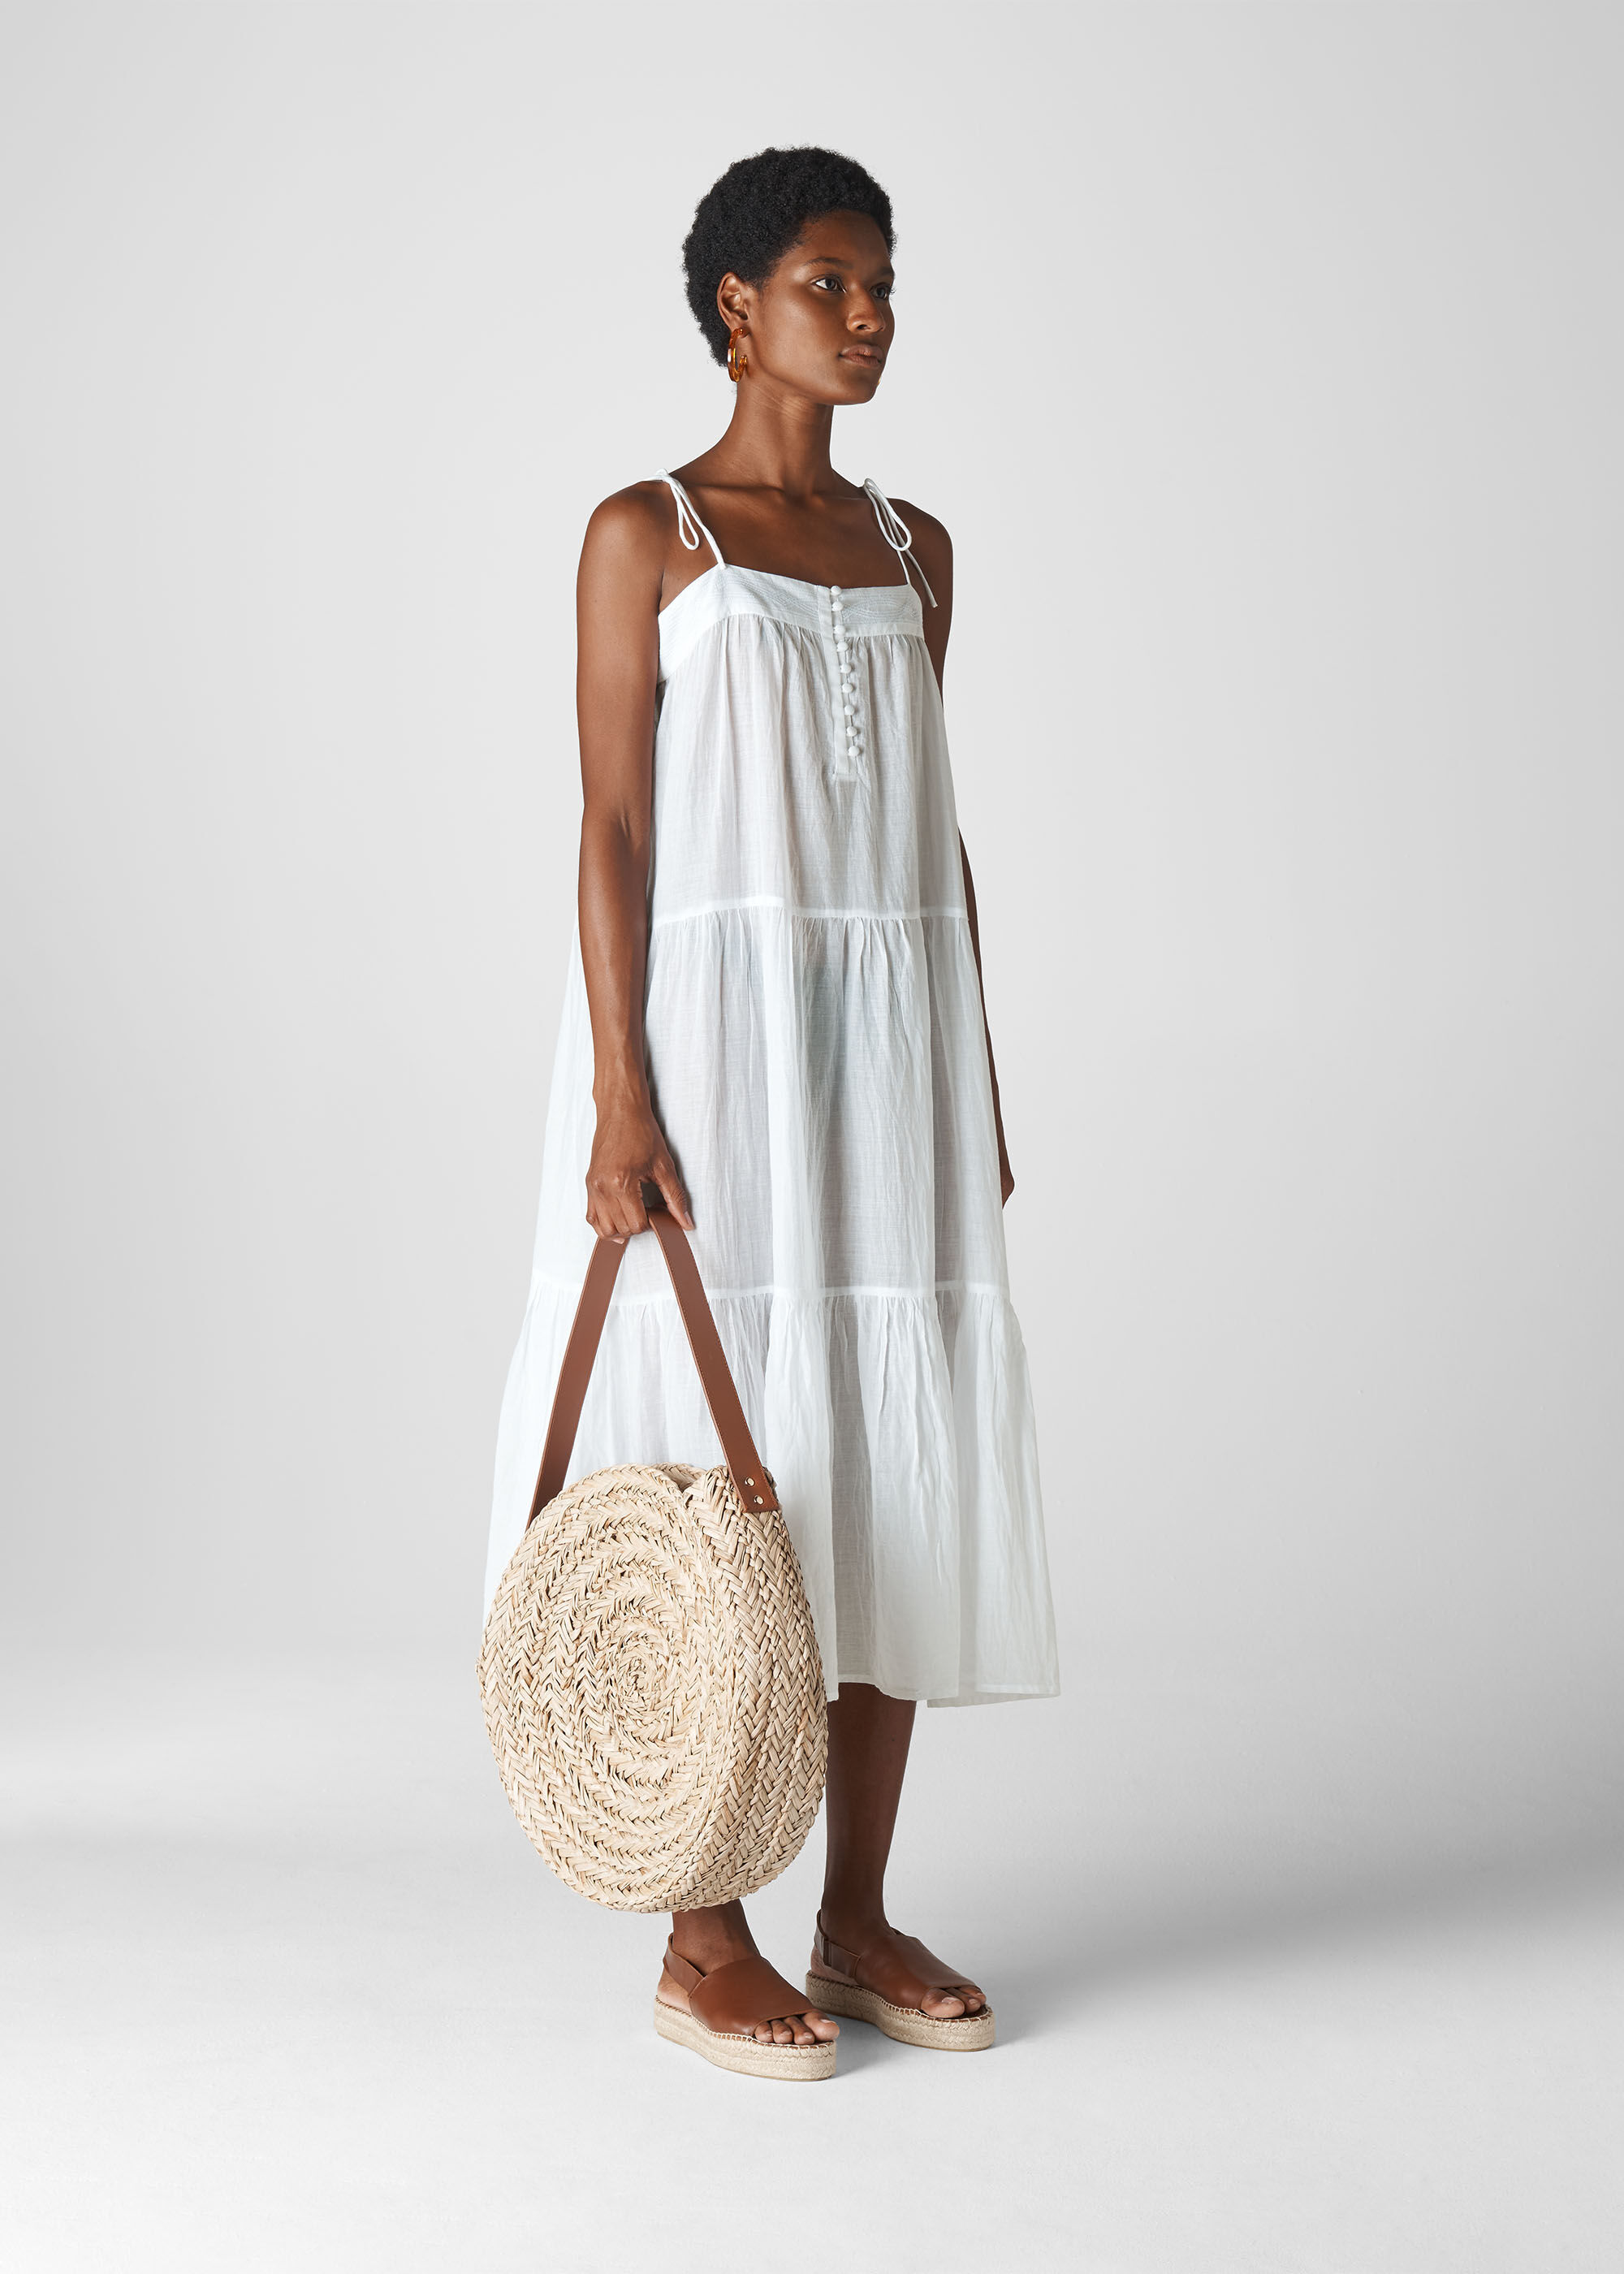 Buy > white dress beach > in stock